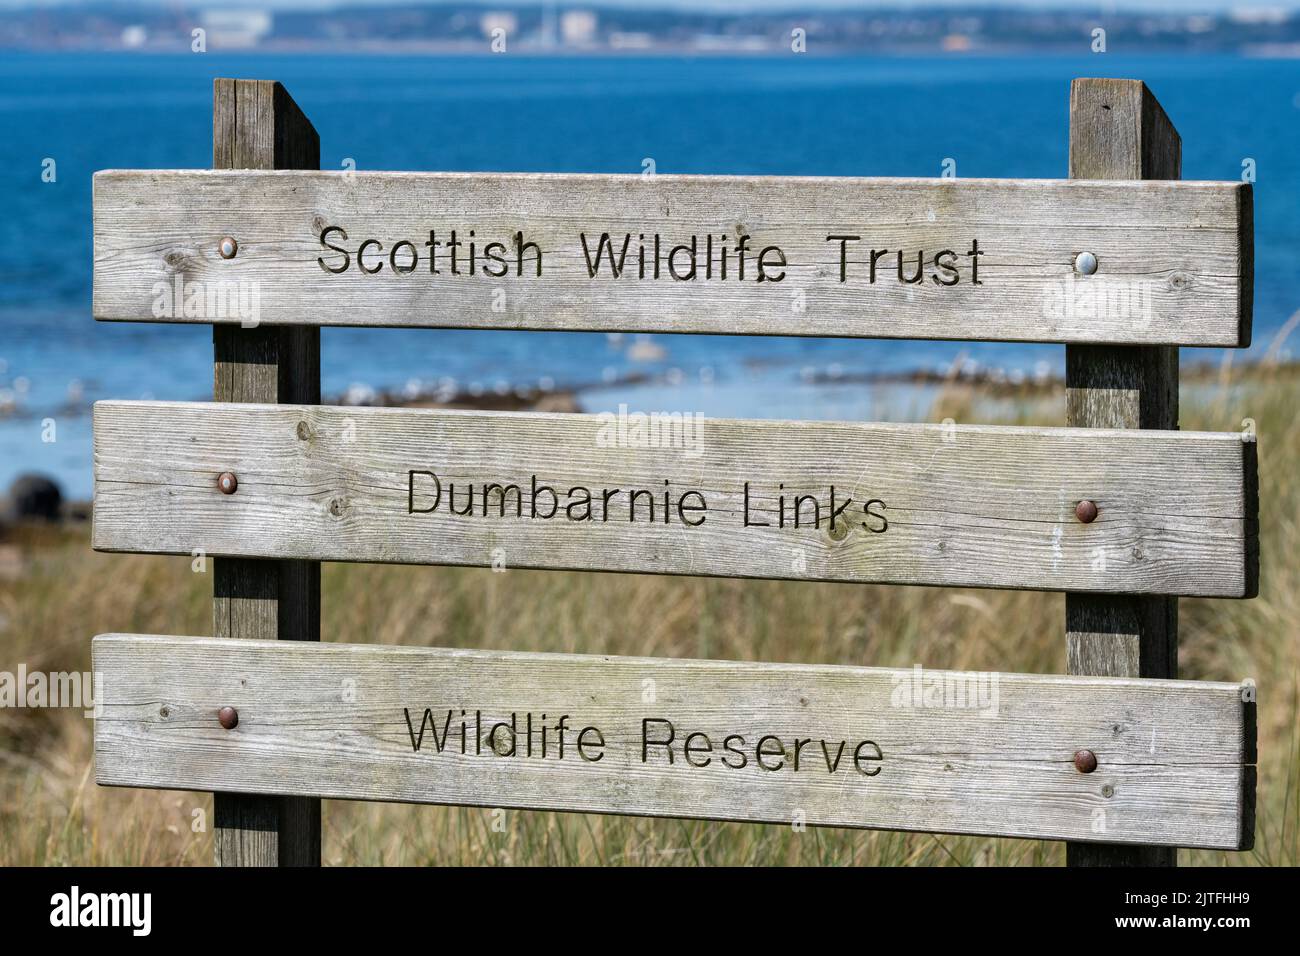 Dumbarnie Links Nature Reserve sign, Fife, Scotland, UK Stock Photo